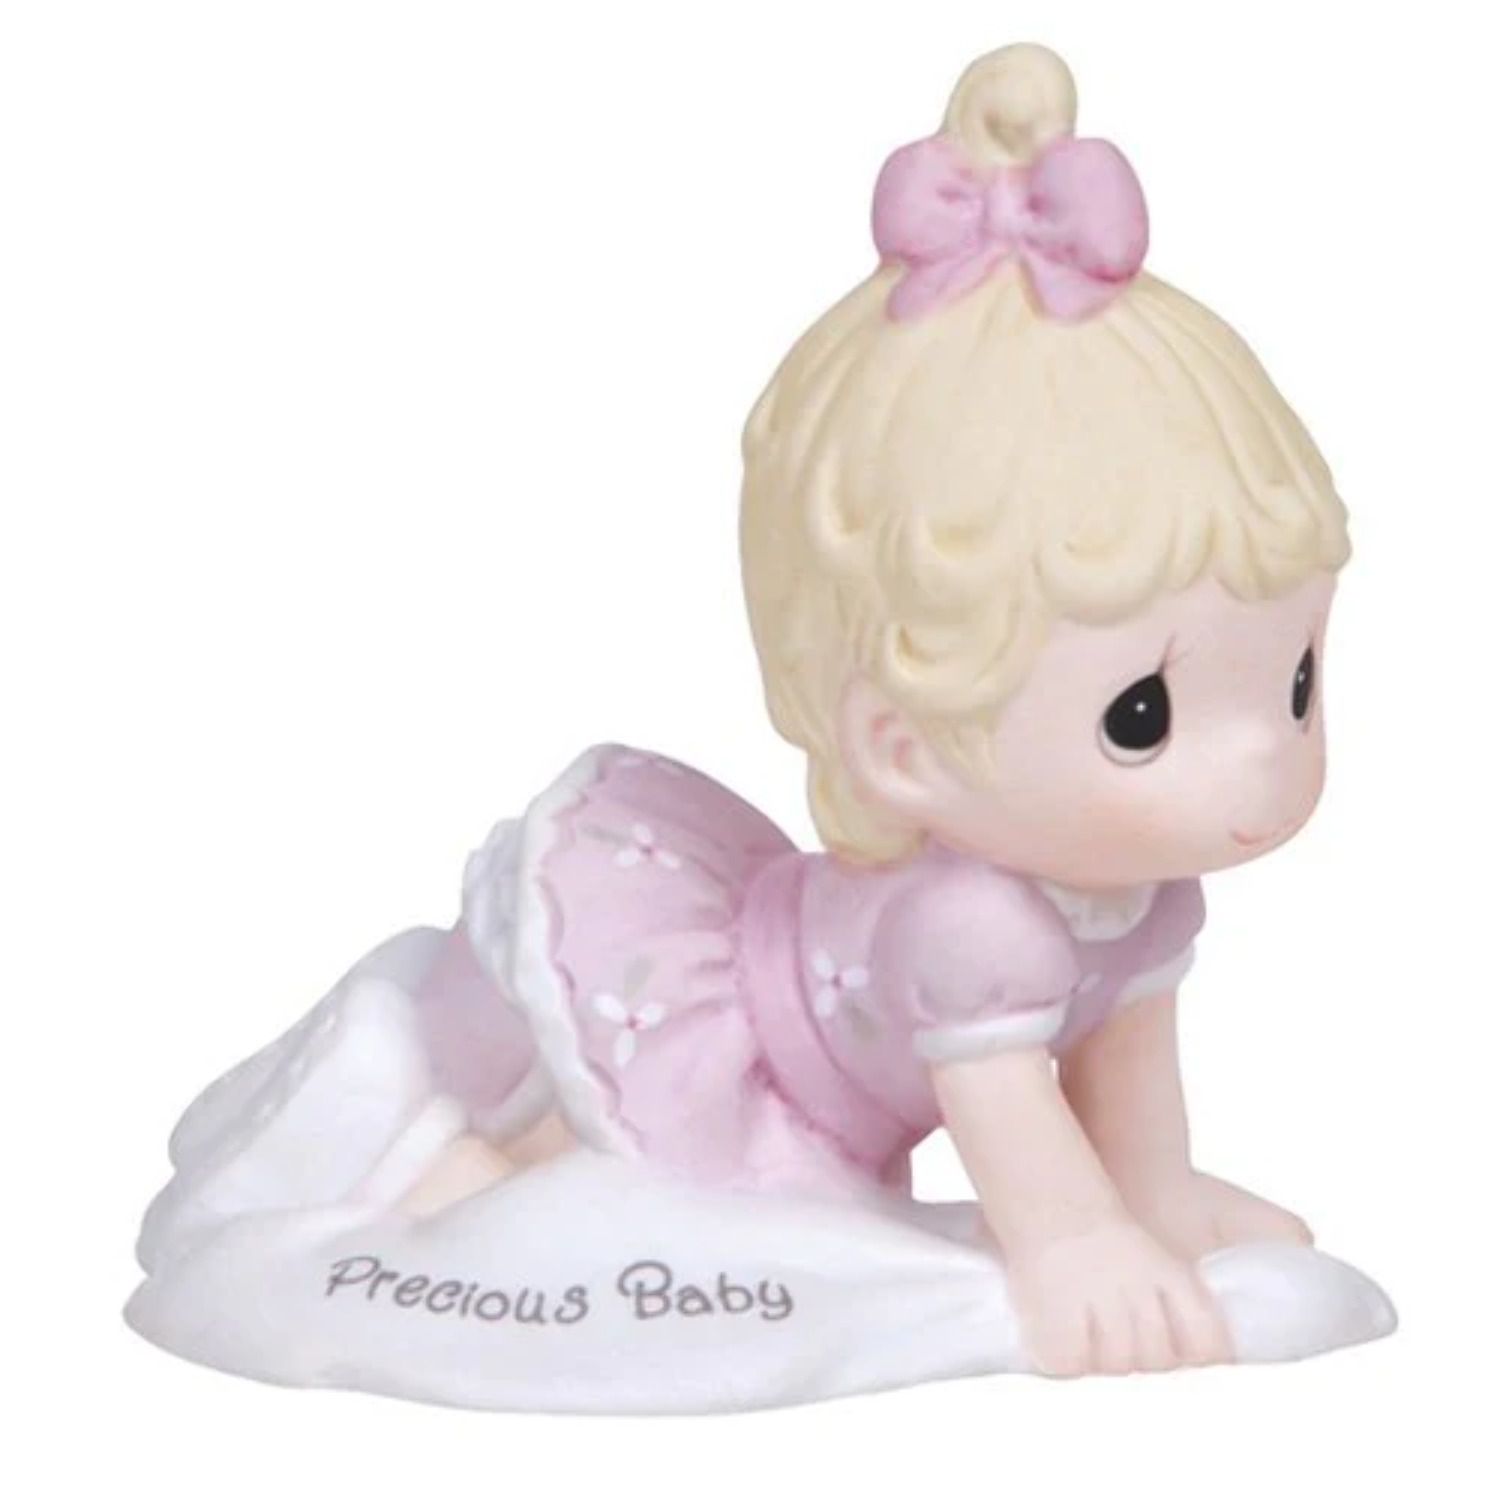 Precious Moments 133023 Precious Baby Blonde Girl Figurine Multi Color - image 1 of 3